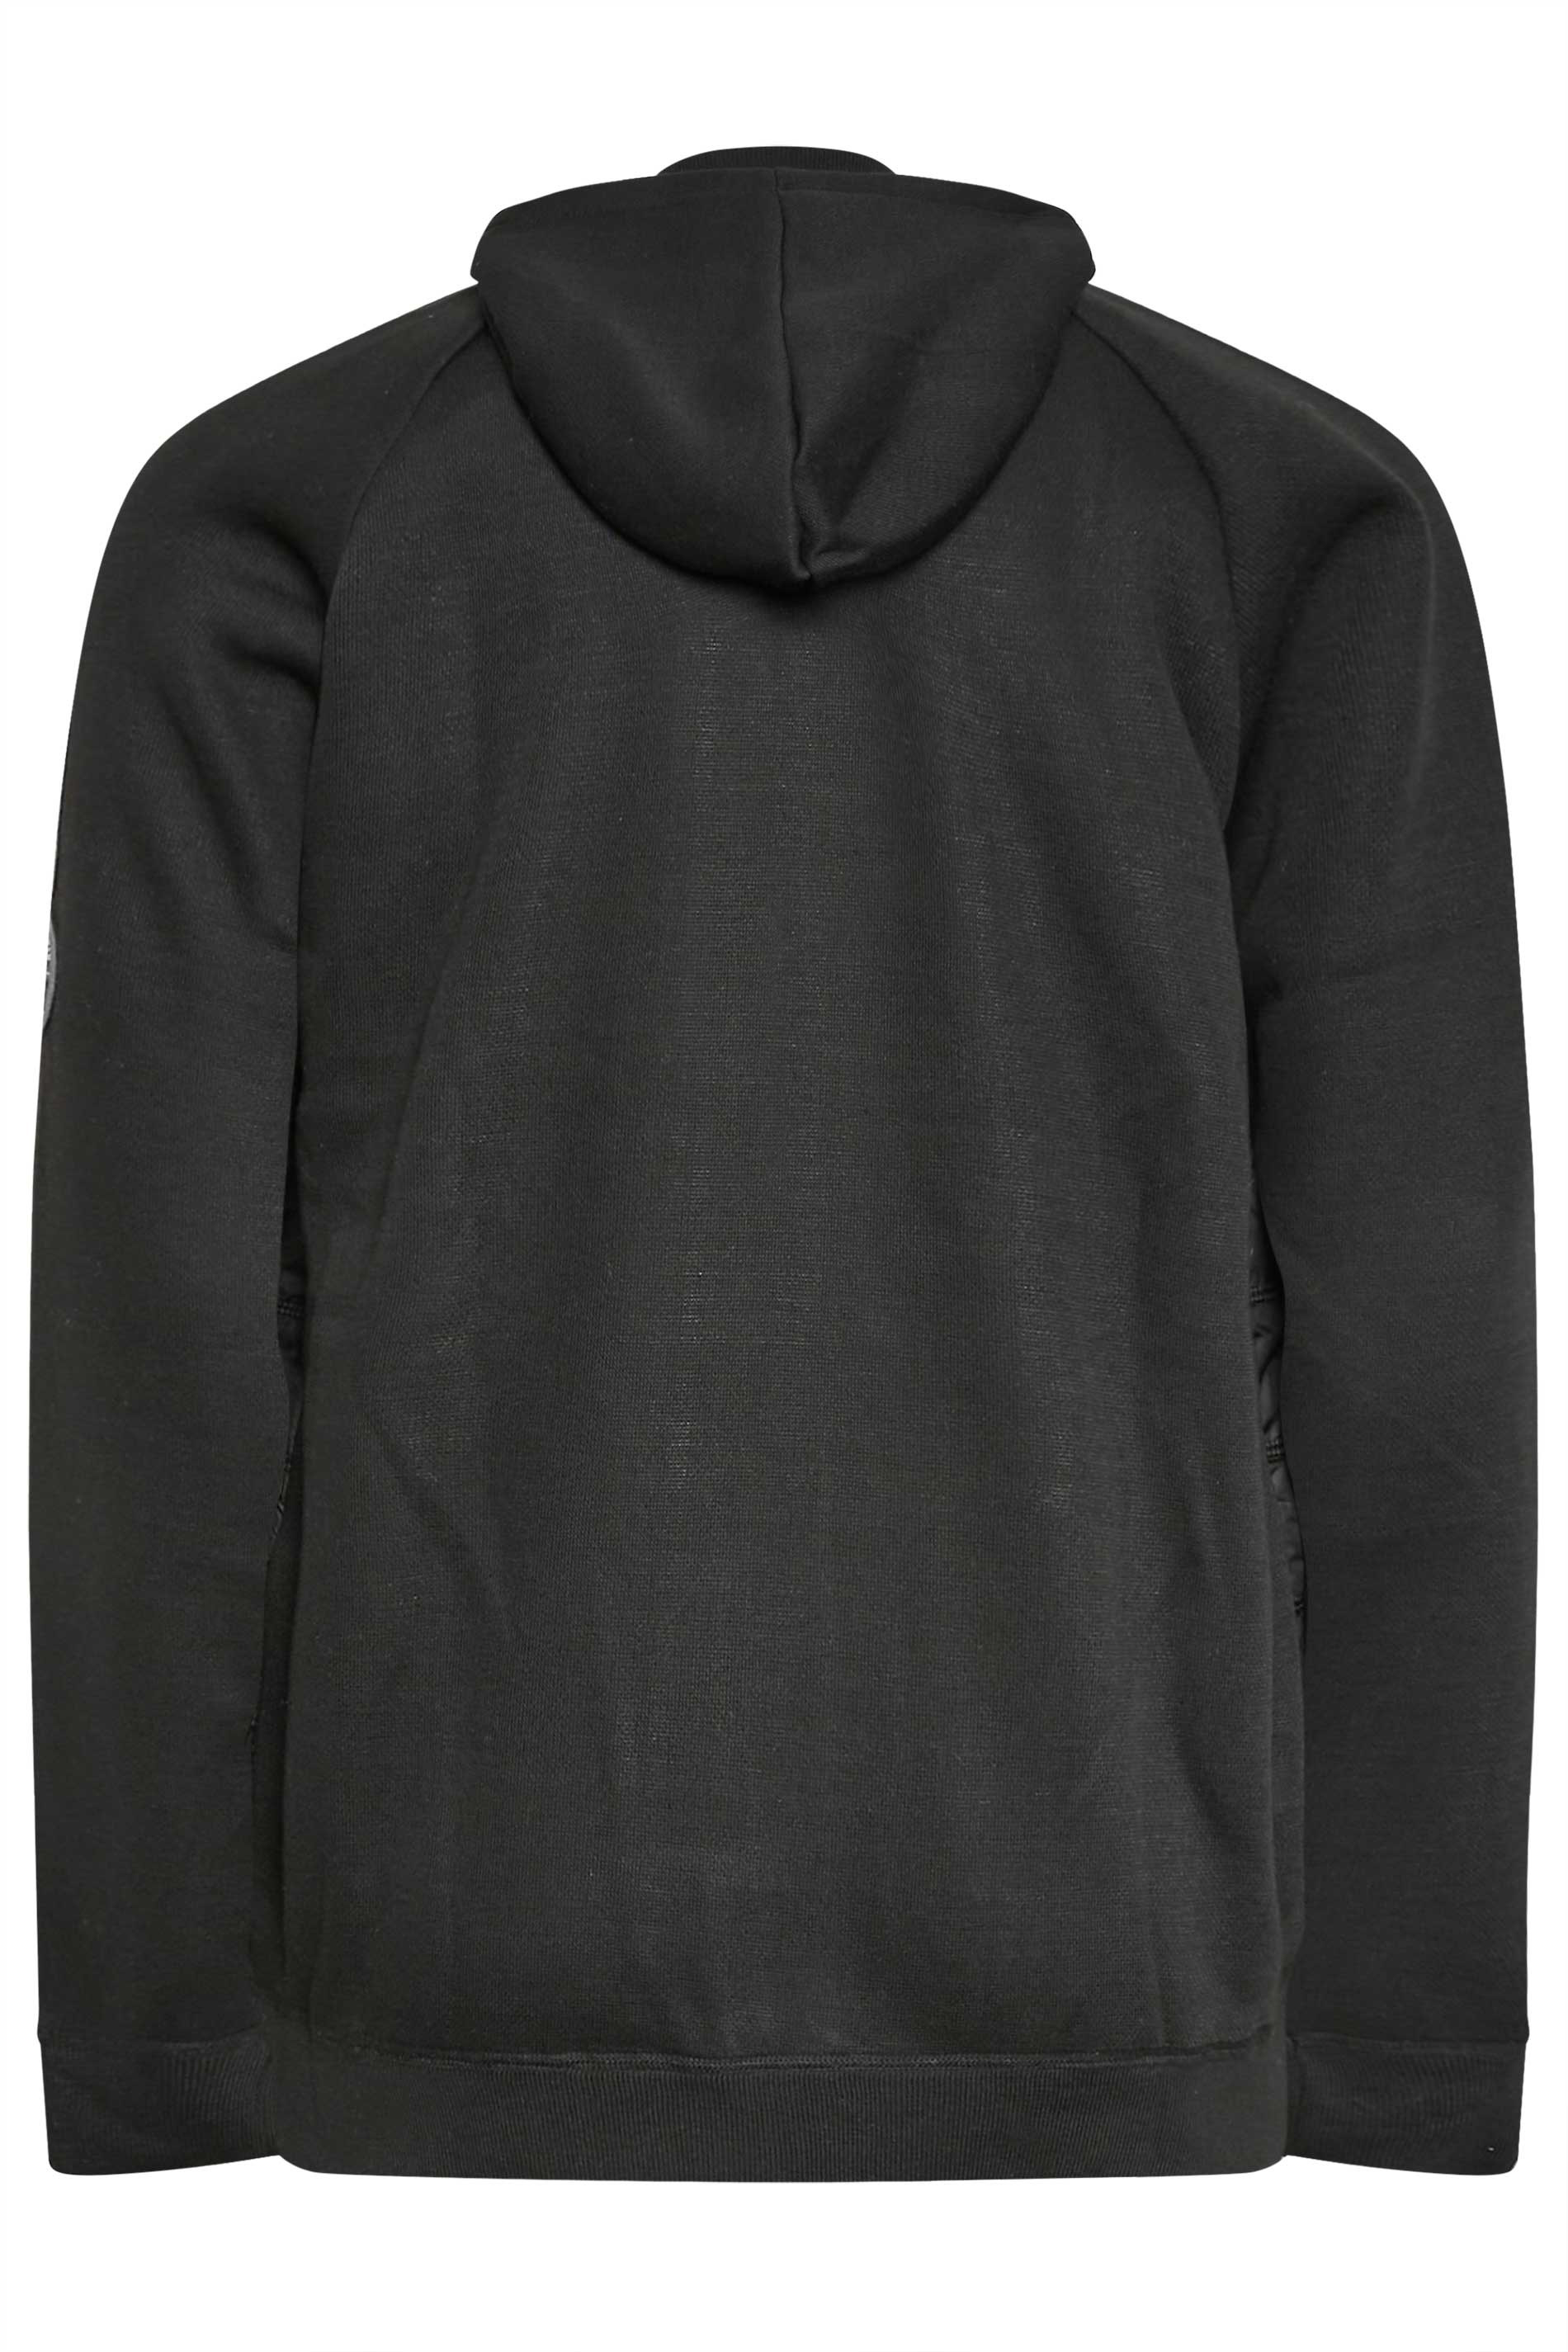 D555 Black Hood Puffer Jacket | BadRhino 2